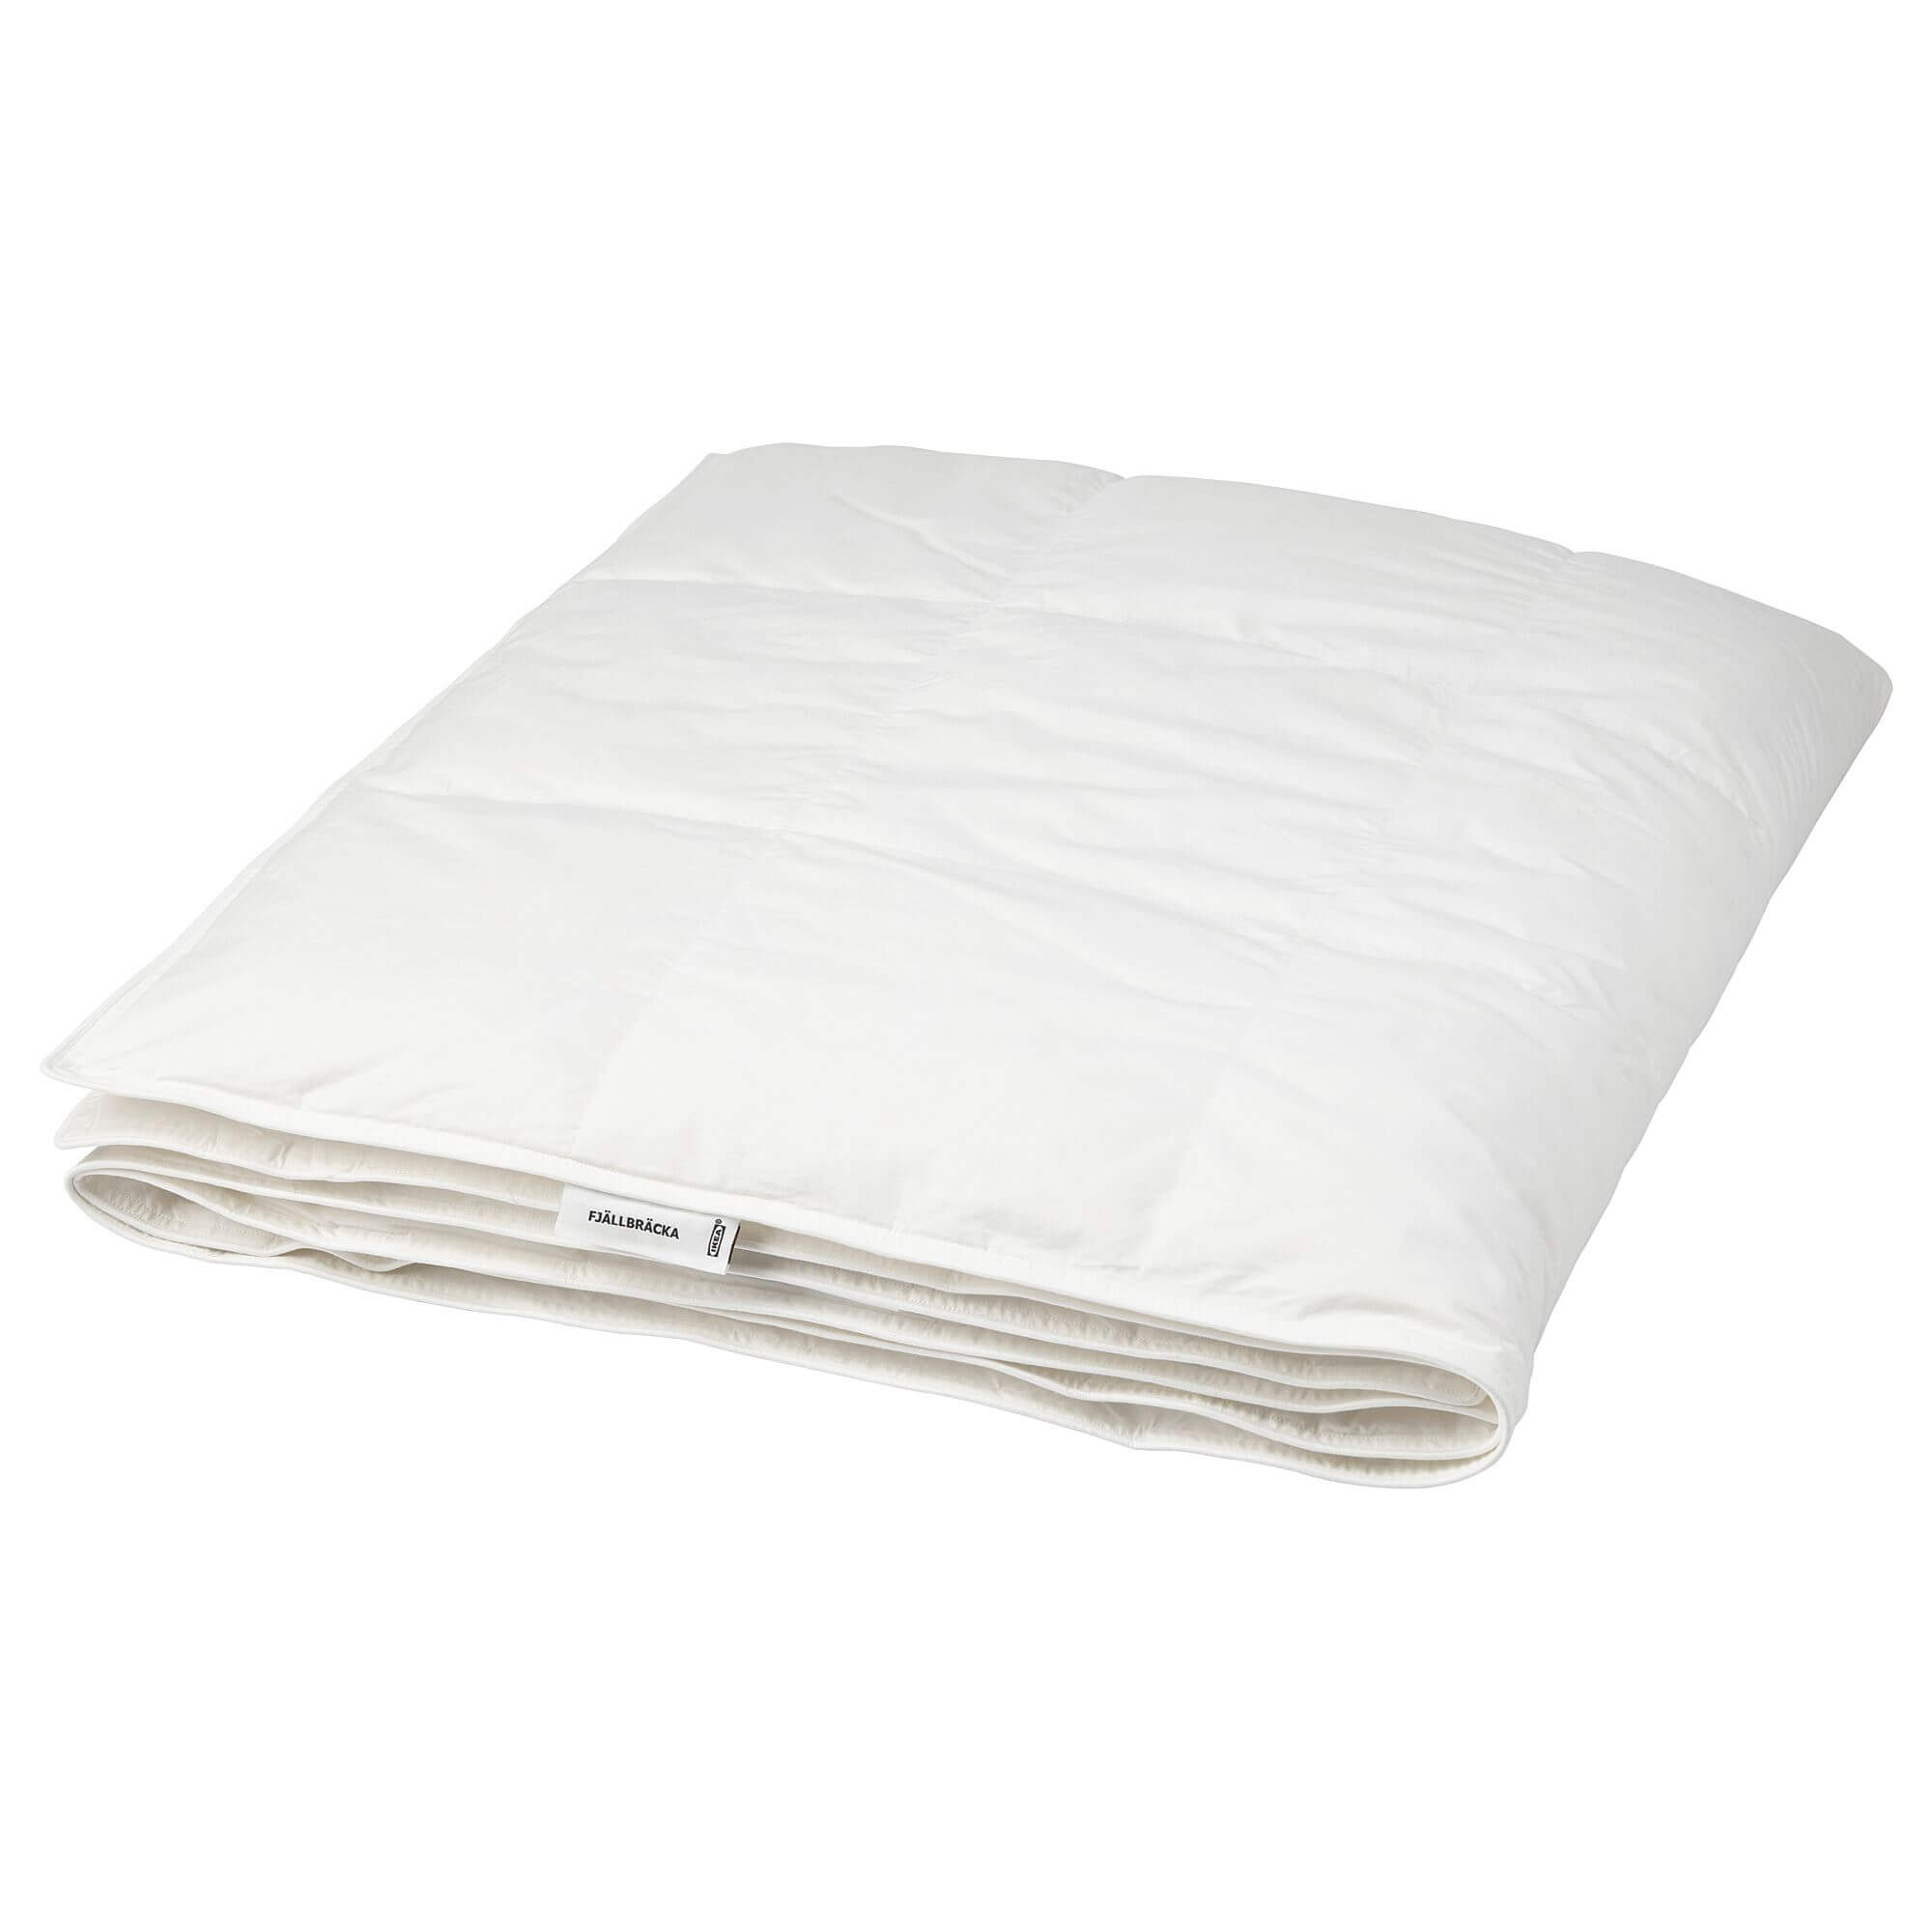 Одеяло теплое Ikea Fjallbracka 150x200 см, белый